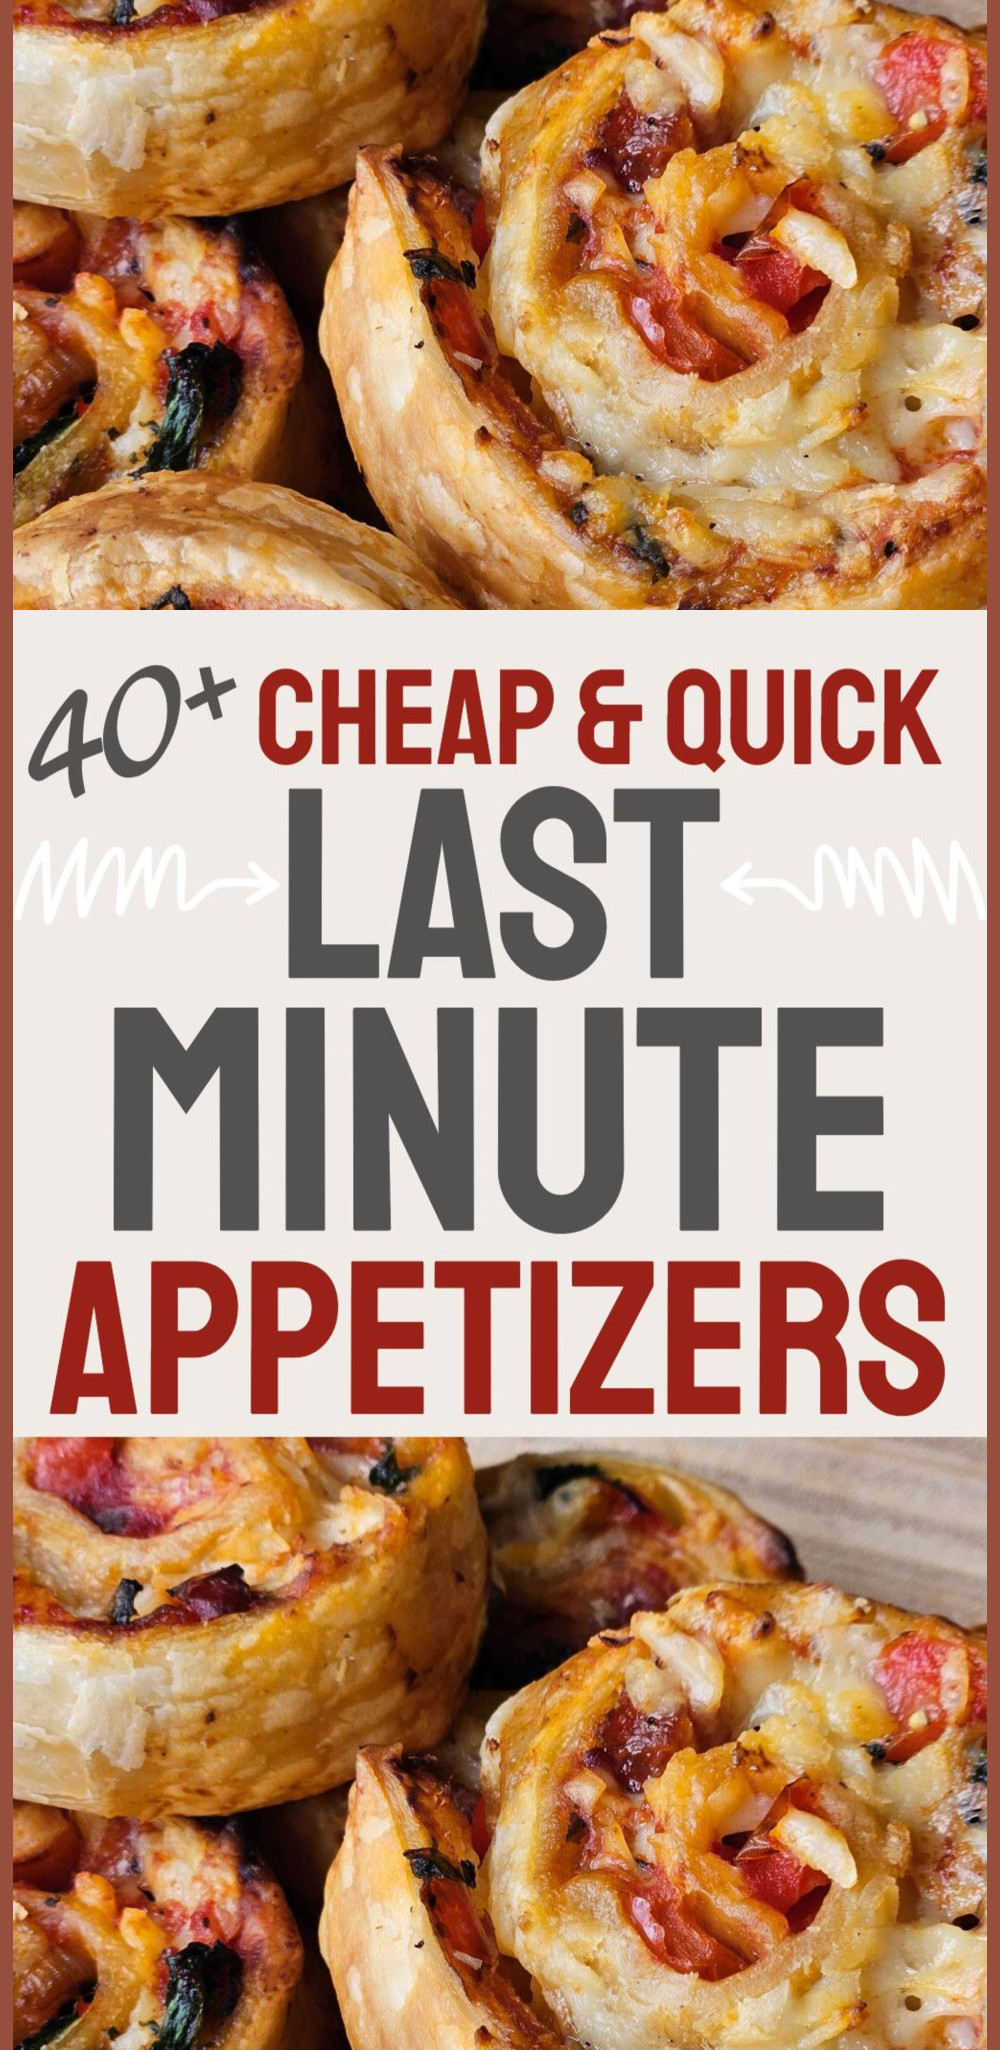 40+ Cheap & Quick Last Minute Appetizers